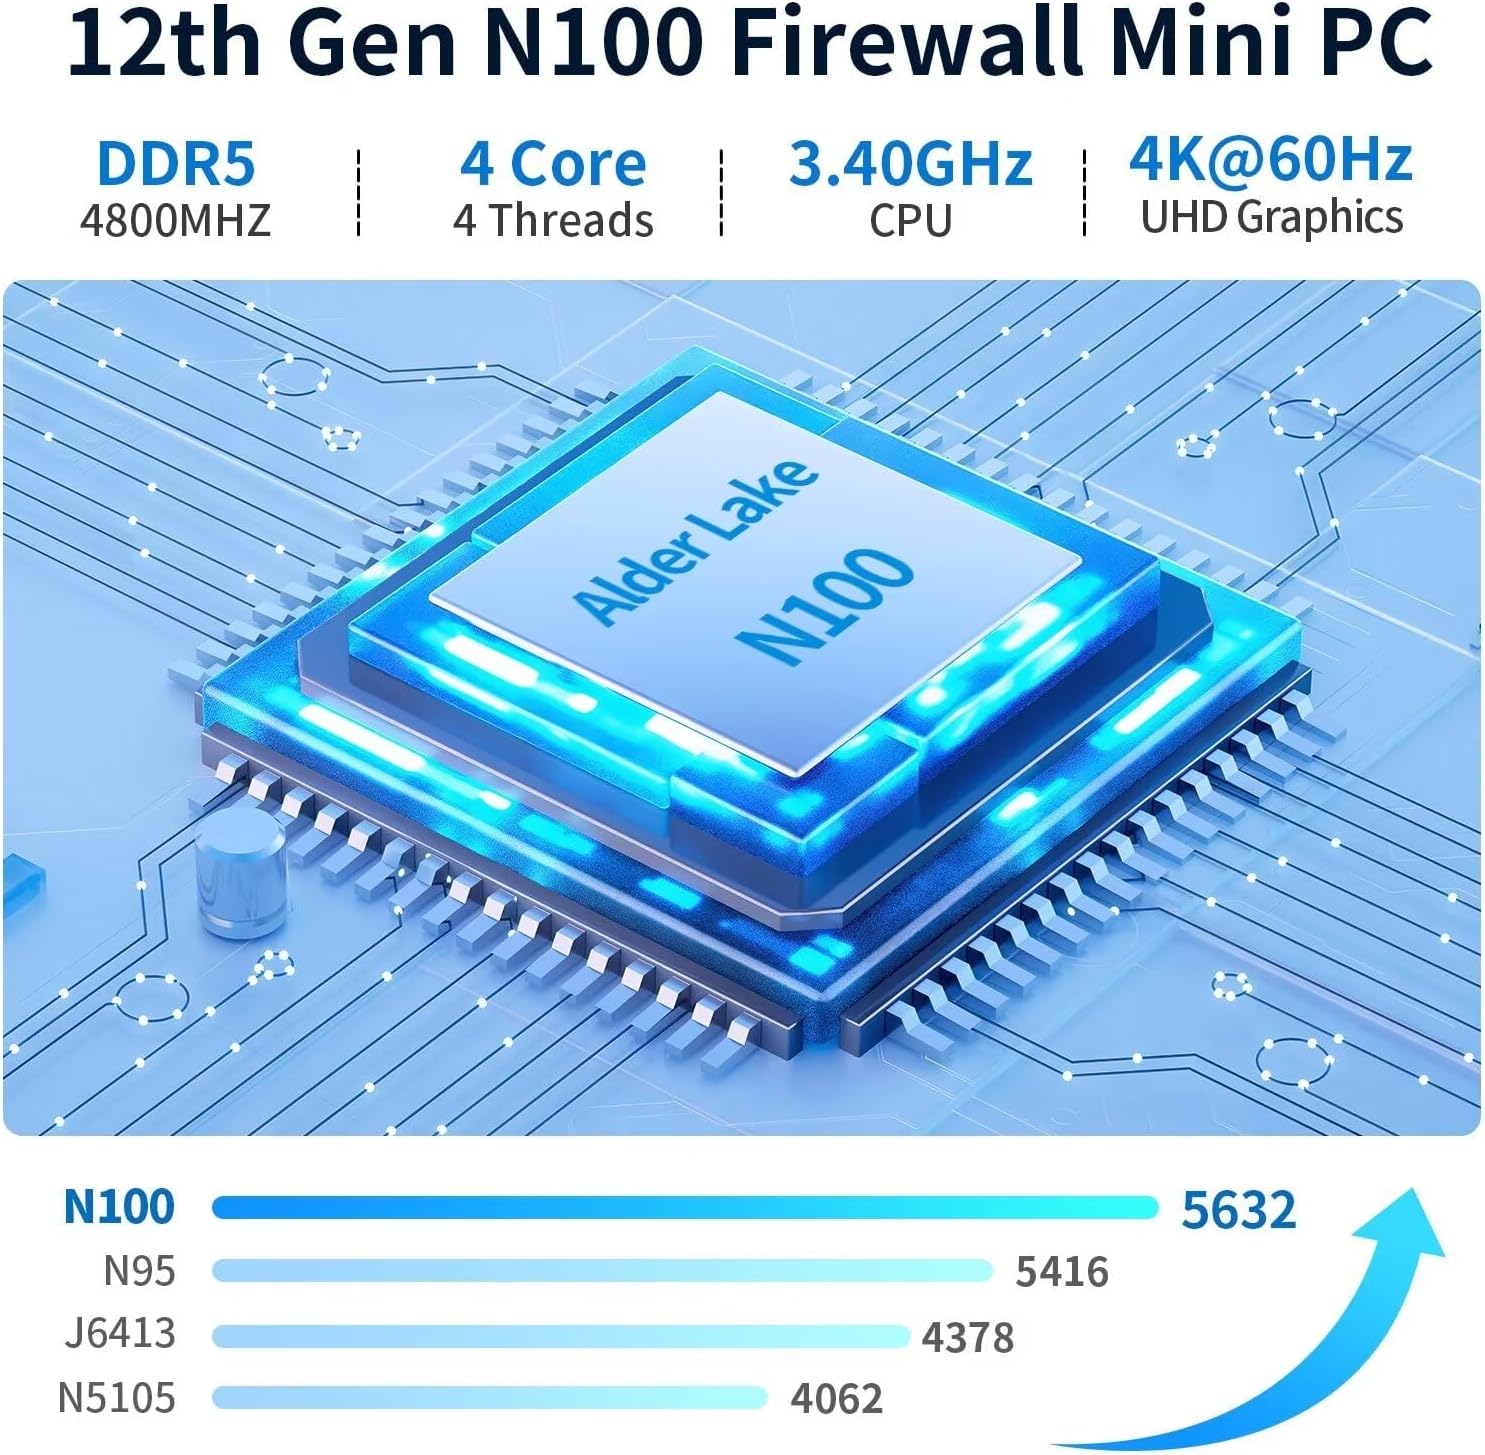 Glovary Firewall Mini PC N100 Review